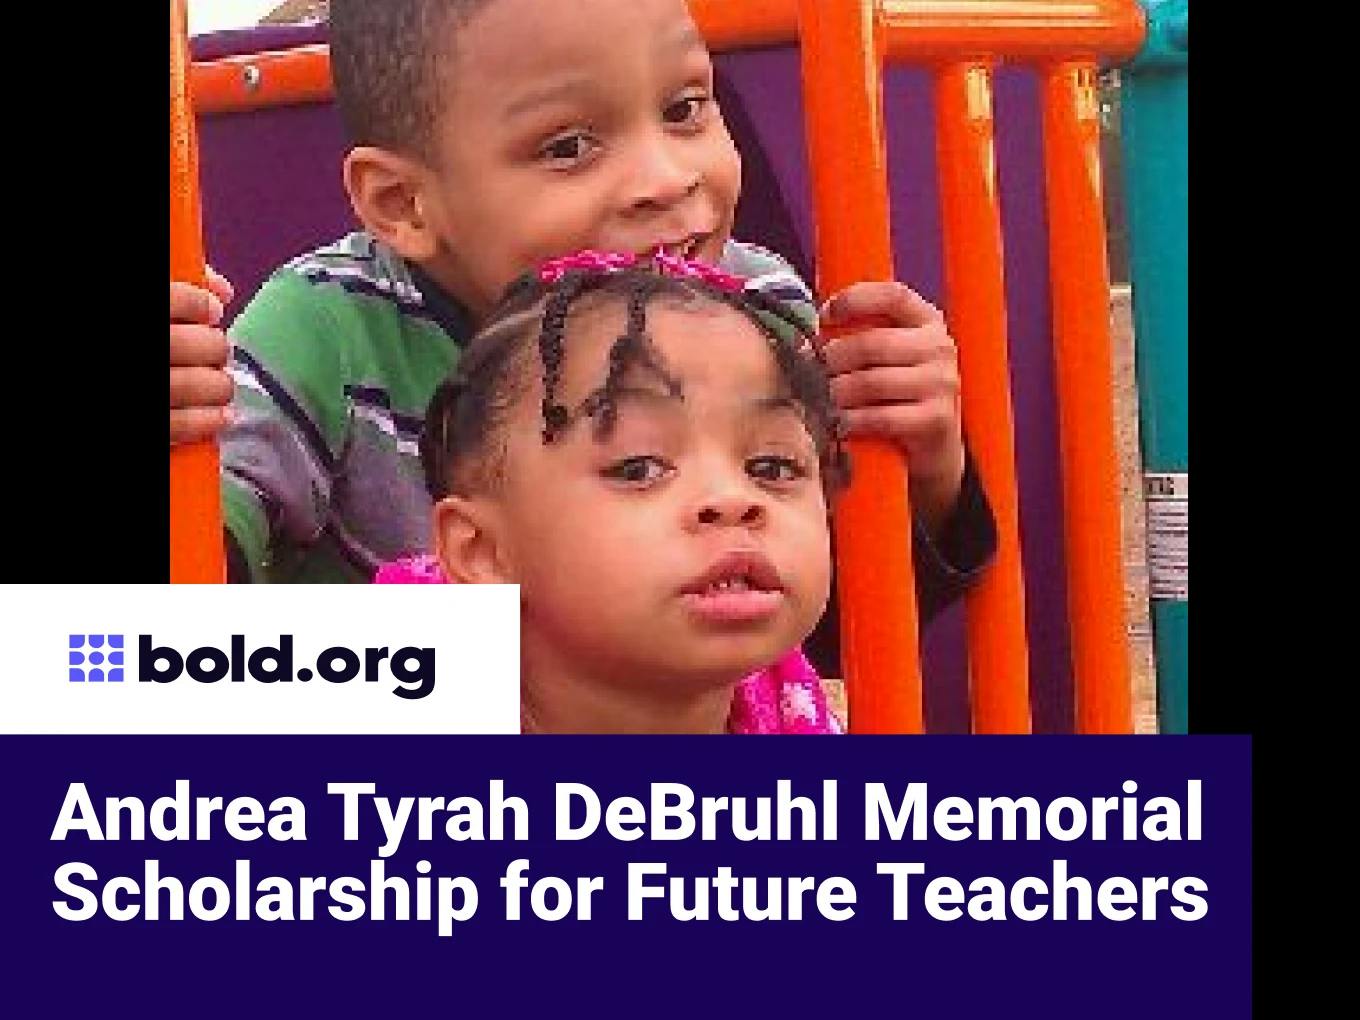 Andrea Tyrah DeBruhl Memorial Scholarship for Future Teachers